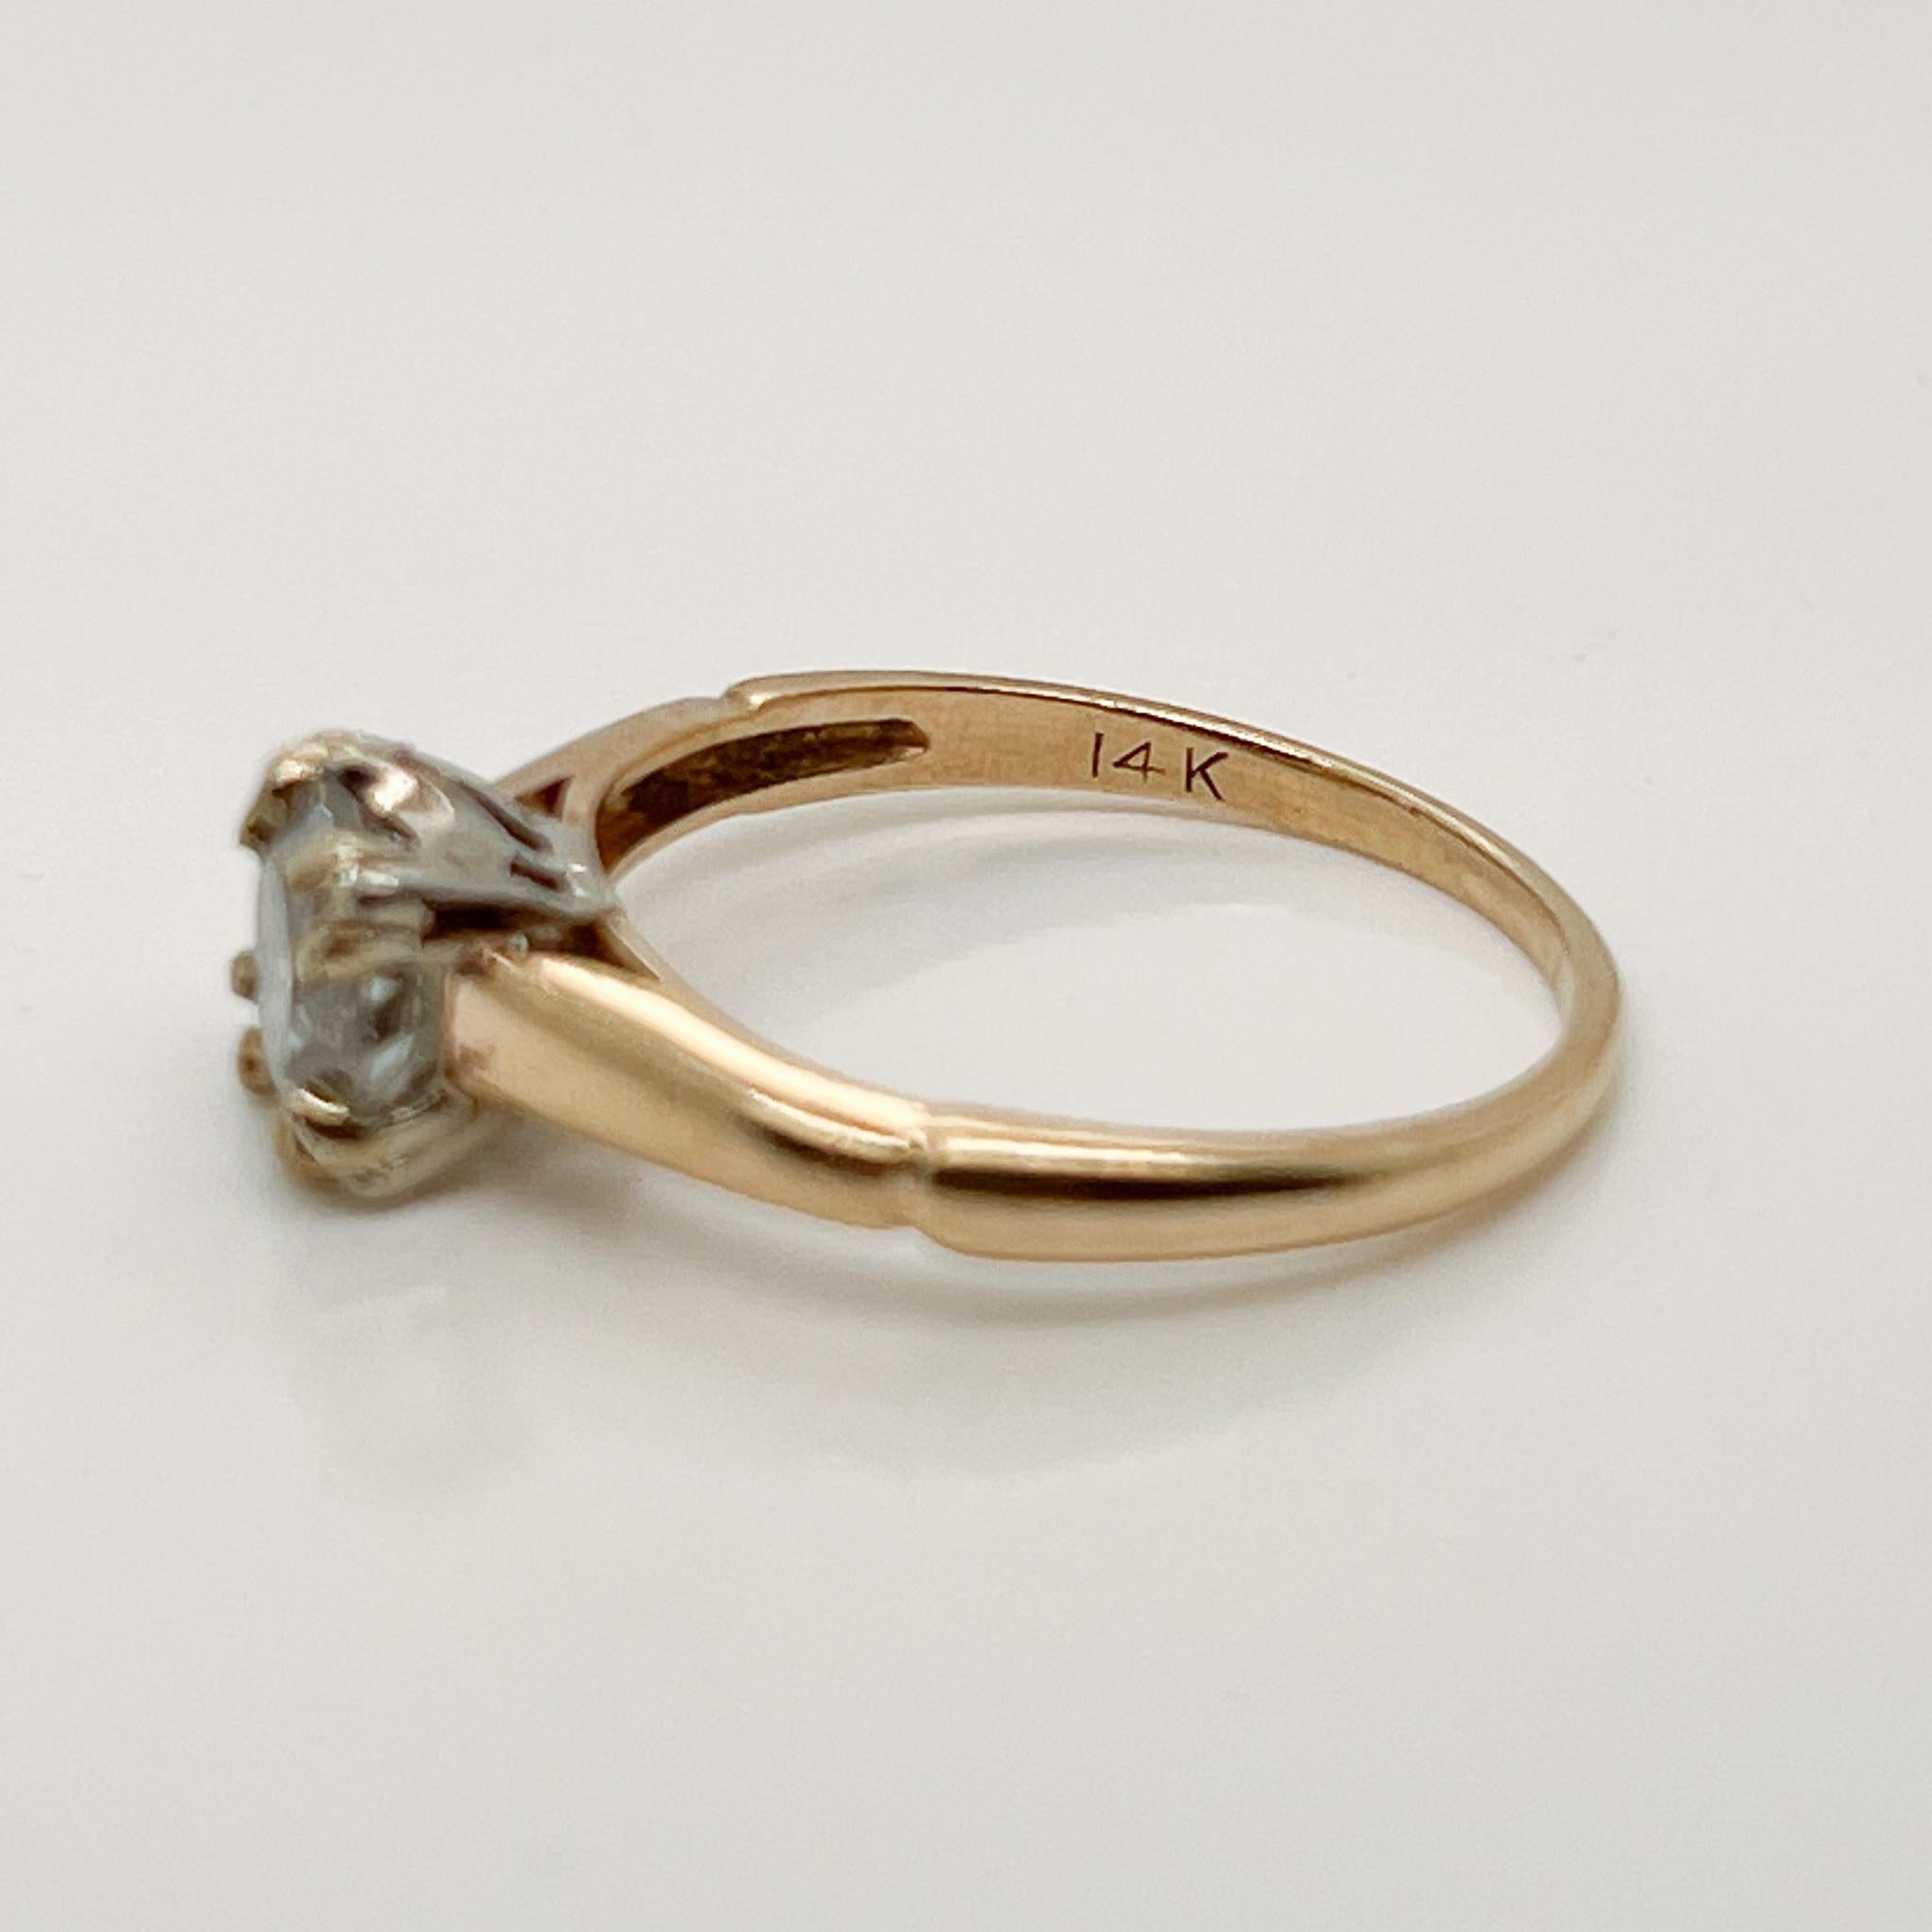 Antique 14 Karat Gold & 0.73 Ct. European Cut Diamond Solitaire Ring For Sale 5